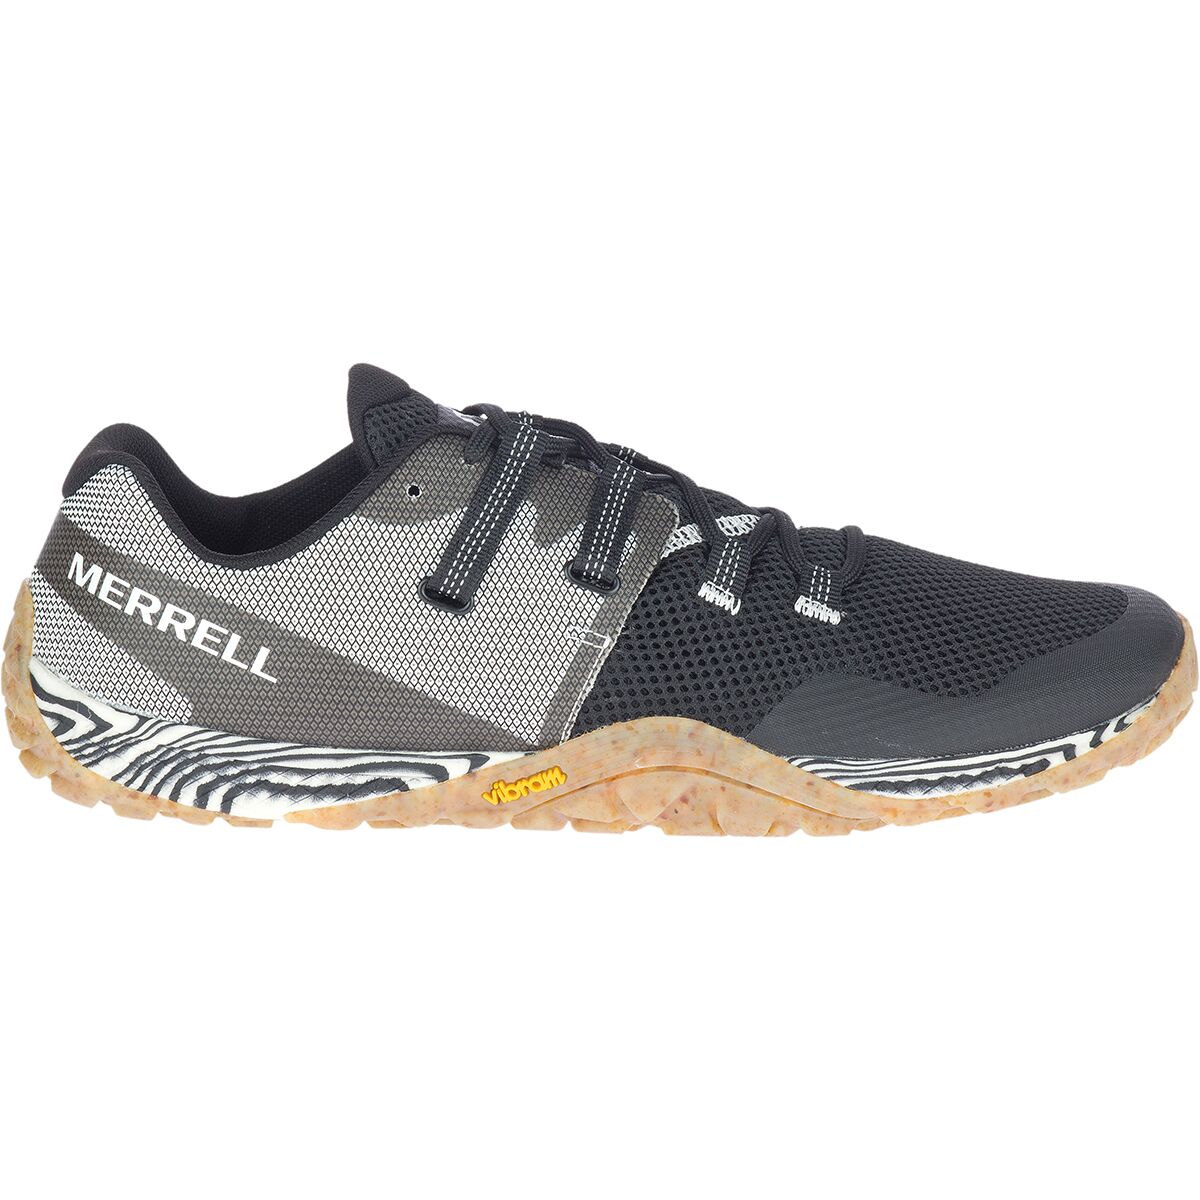 Merrell Trail Glove 6 Solution Dye Shoe - Men's